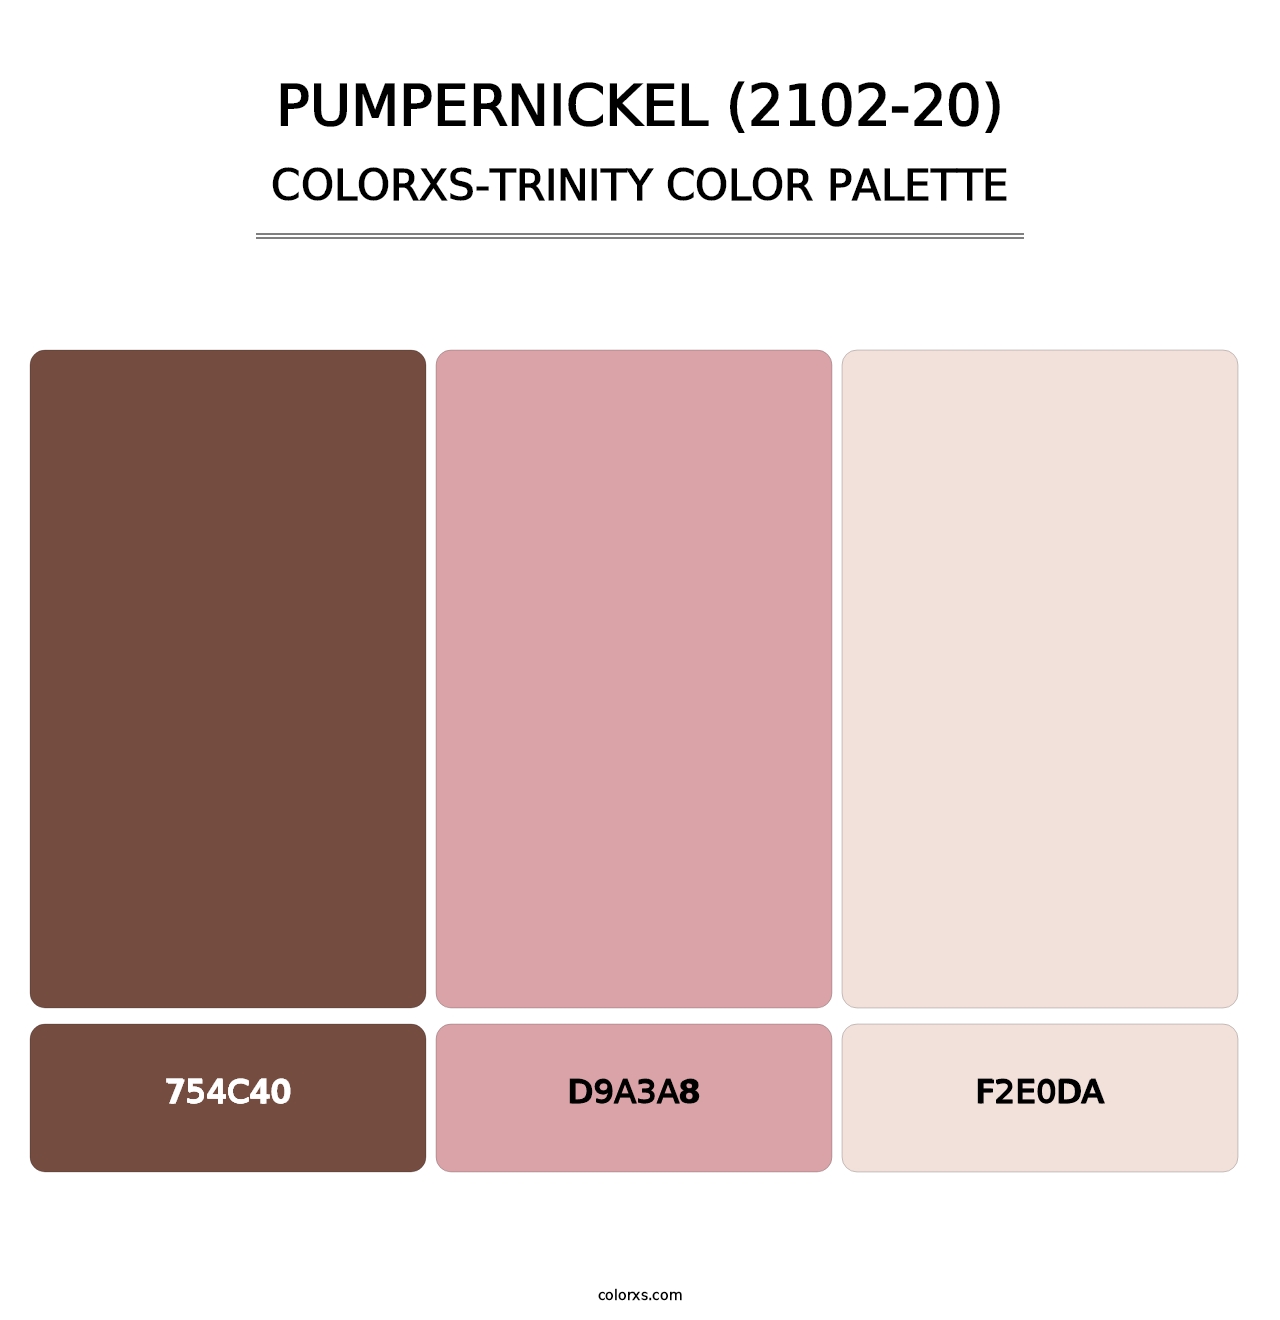 Pumpernickel (2102-20) - Colorxs Trinity Palette